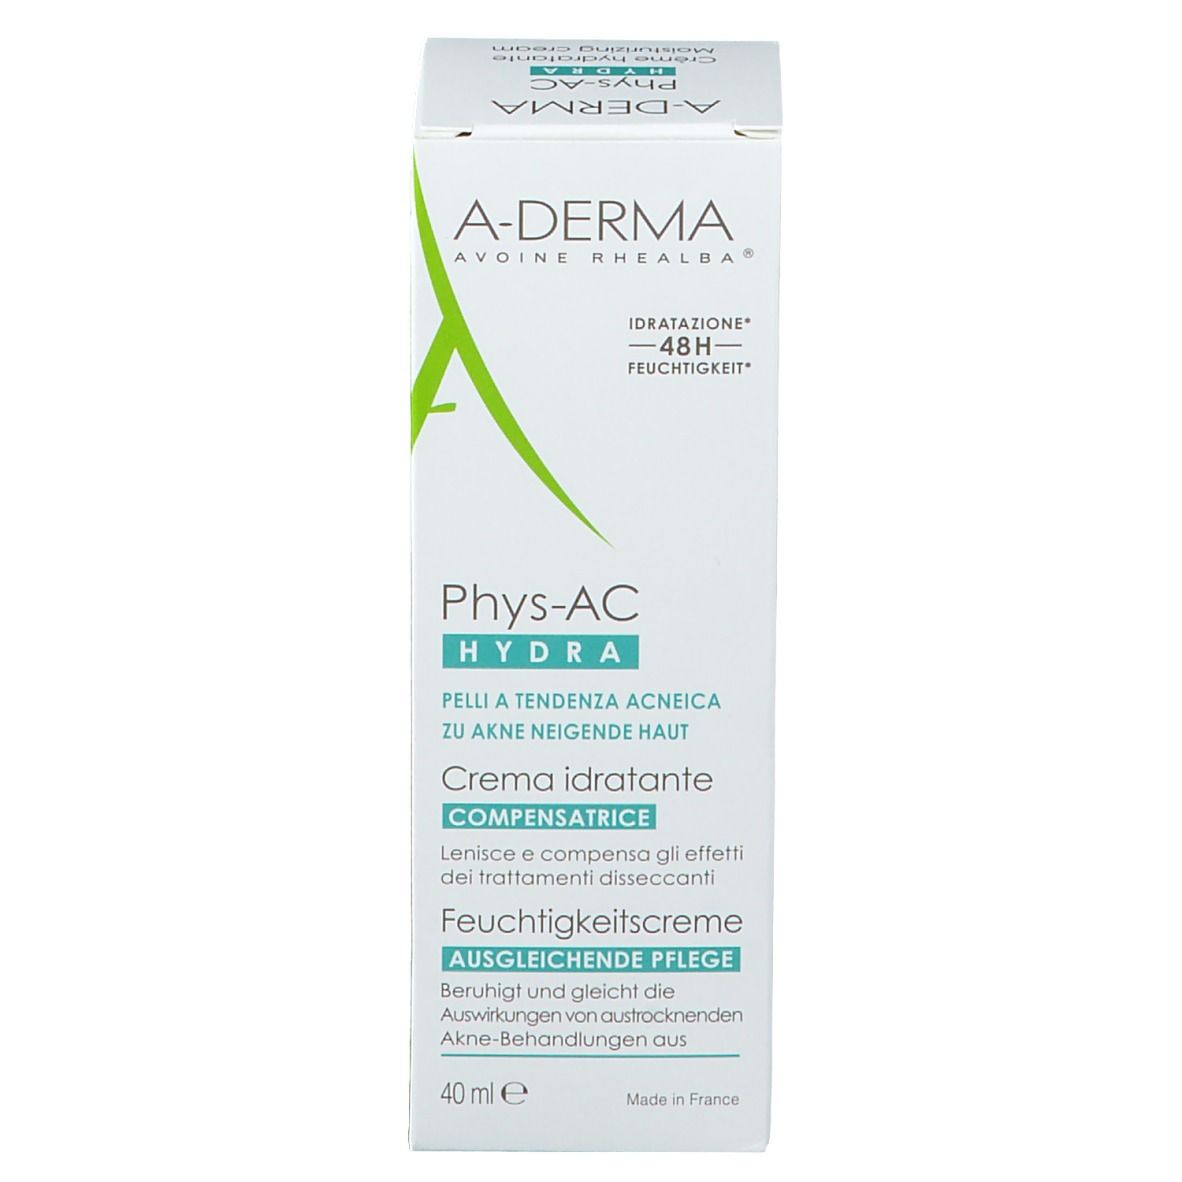 A-DERMA Phys-AC Hydra Crema Idratante Compensatrice